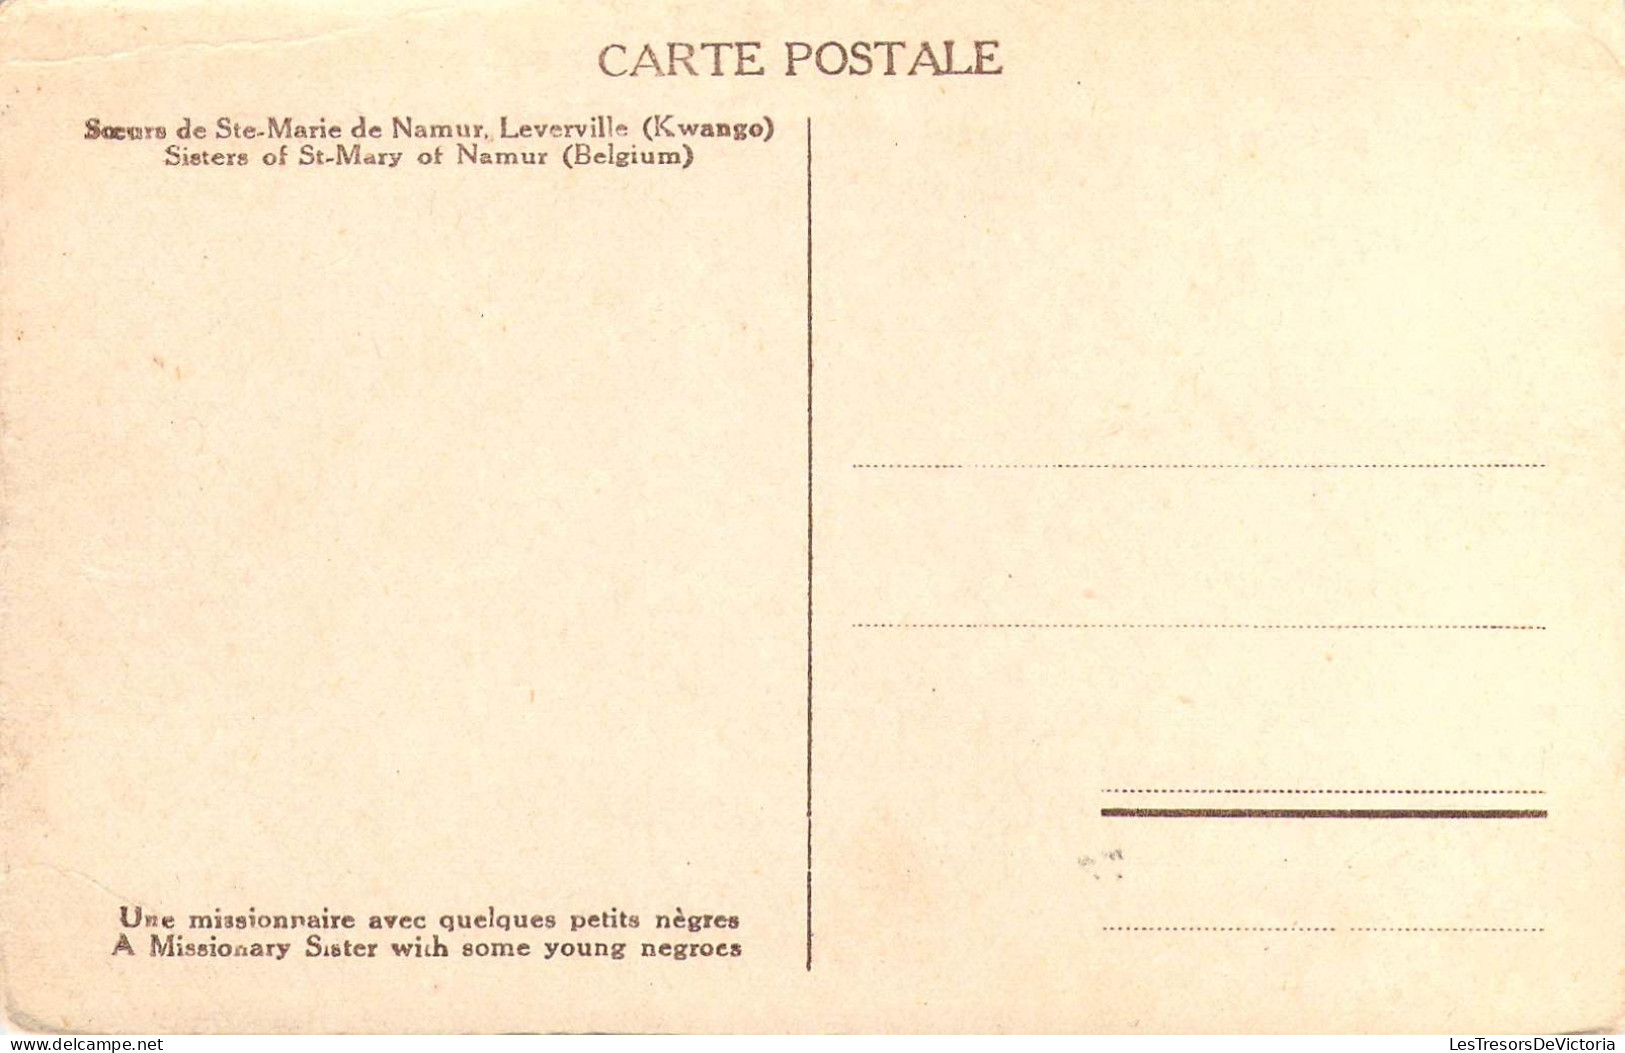 CONGO BELGE - Sœurs De Ste-Marie De Namur - Leverville ( Kwango ) - Carte Postale Ancienne - Congo Belge